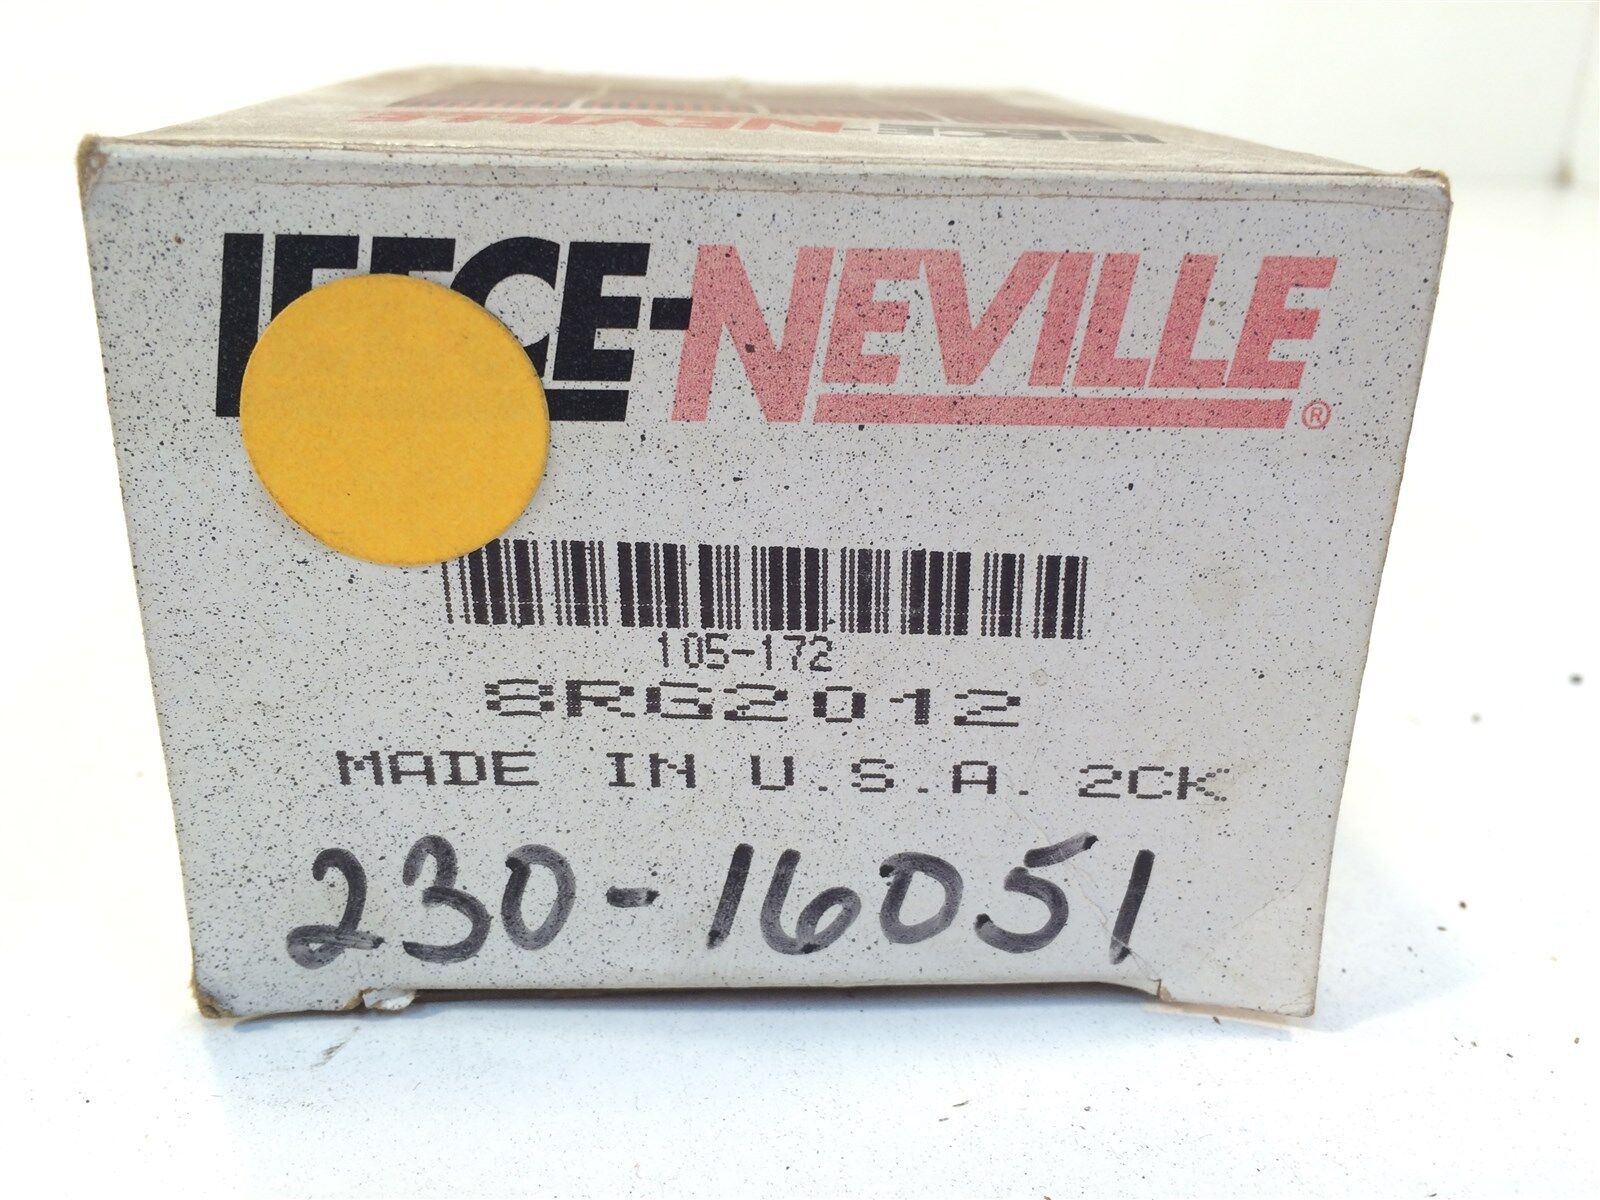 Leece-Neville 105-172 8RG2012 Electronic Voltage Regulator Joh...